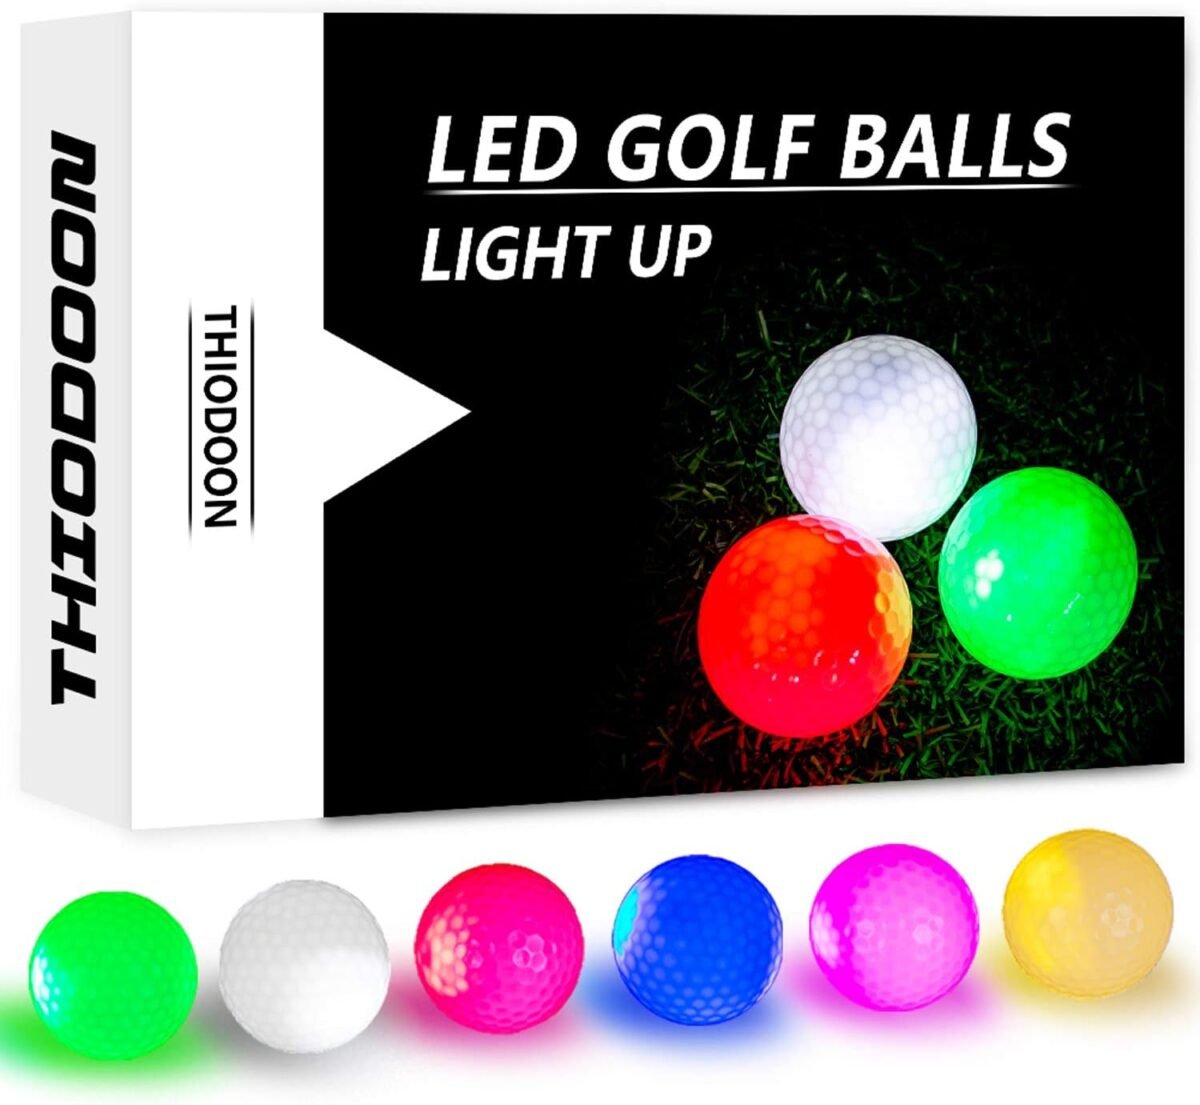 5 Golf Balls: A Comparative Review